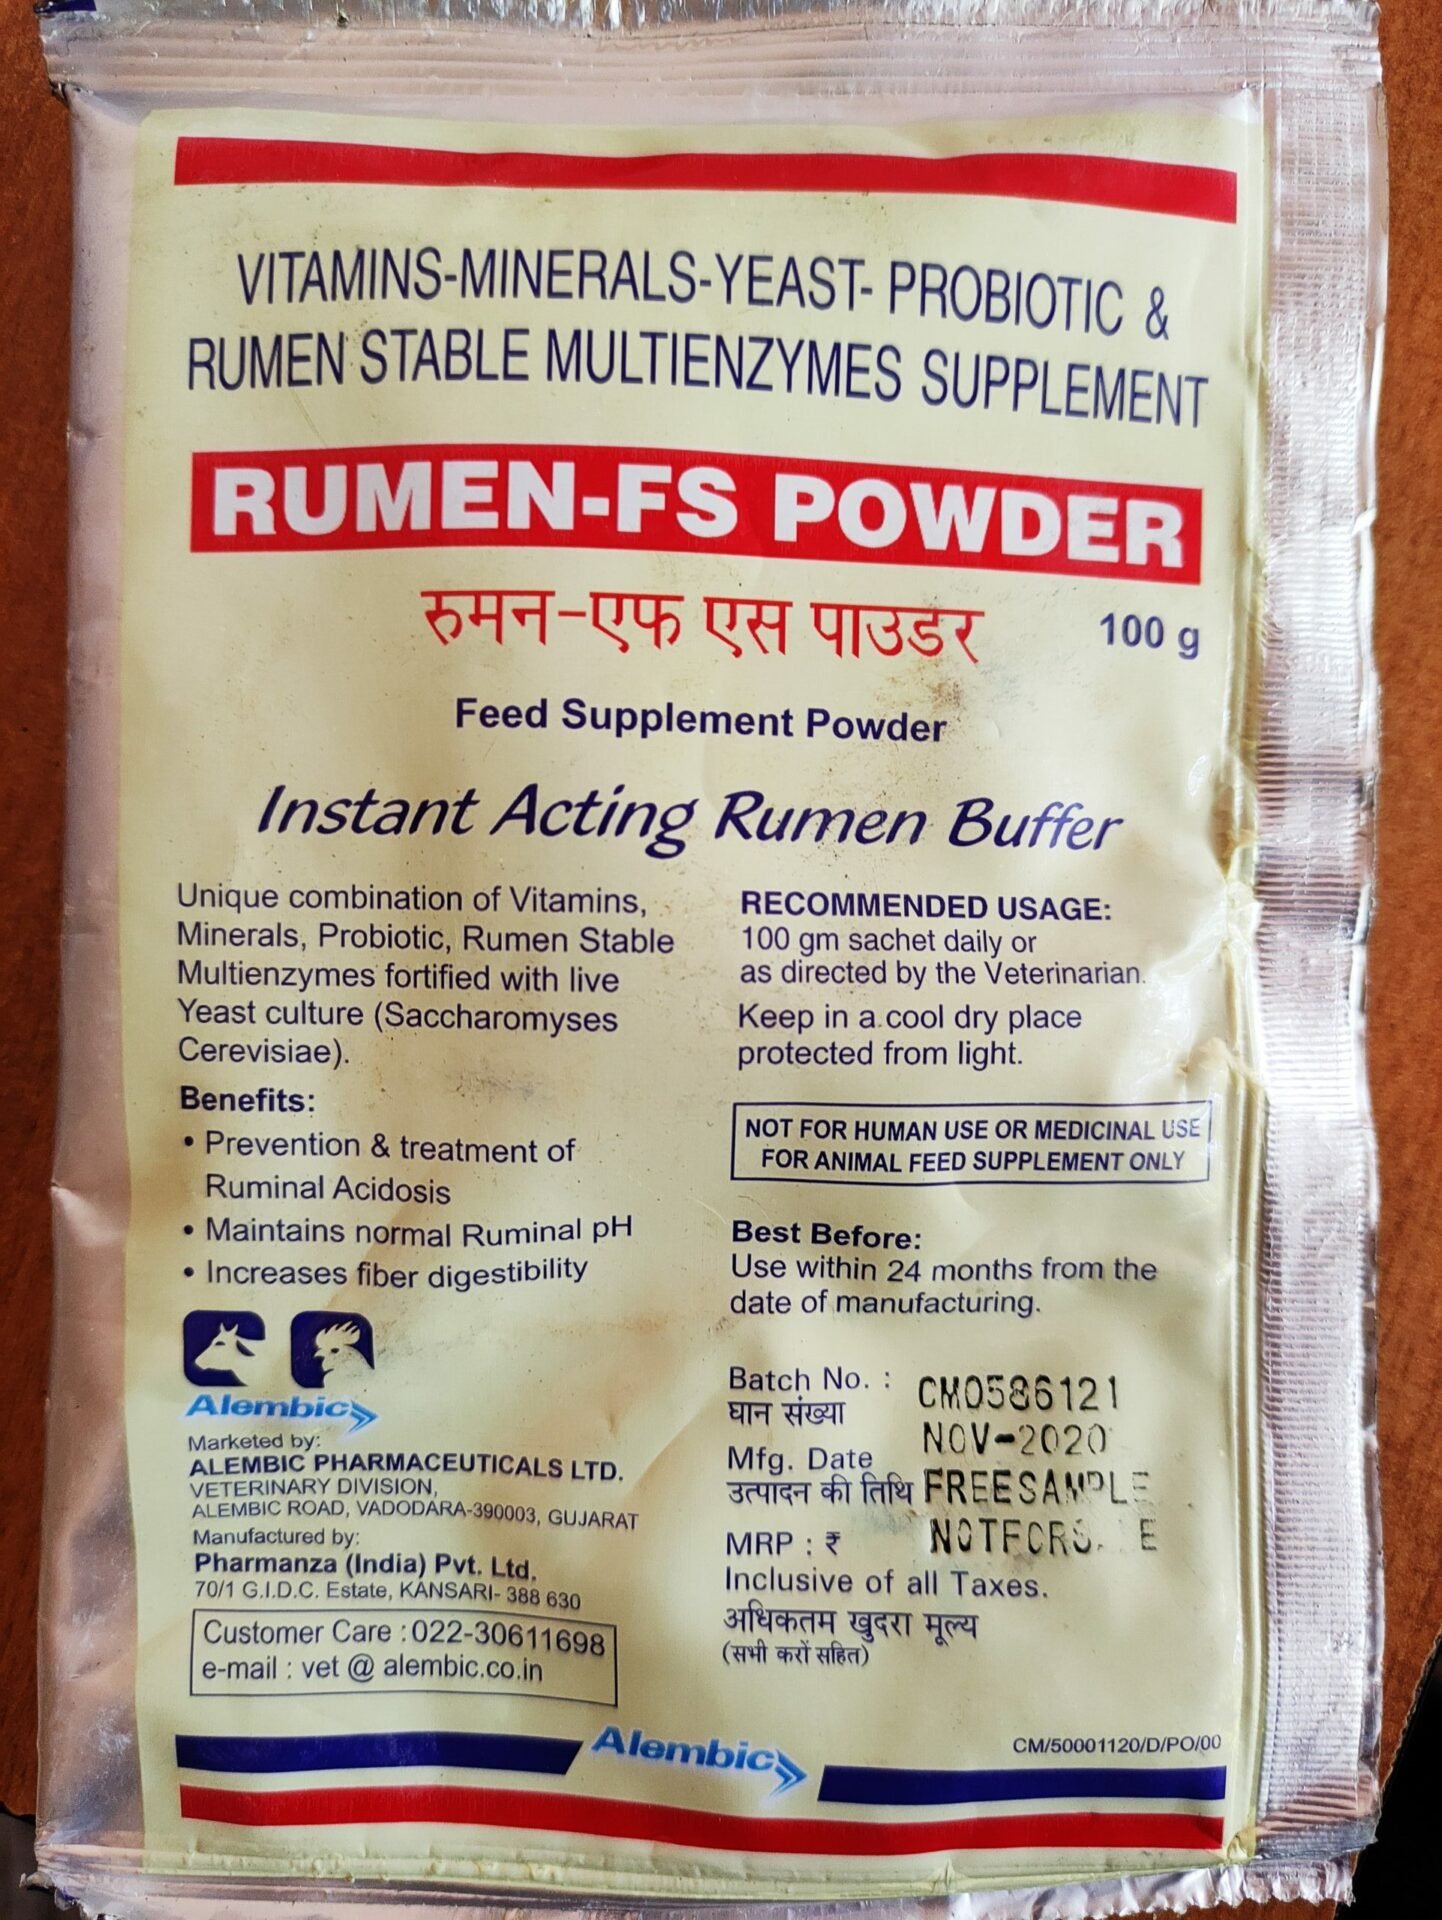 Rumen-FS Powder 100g Sachet - Your One-Stop Shop for Animal Health